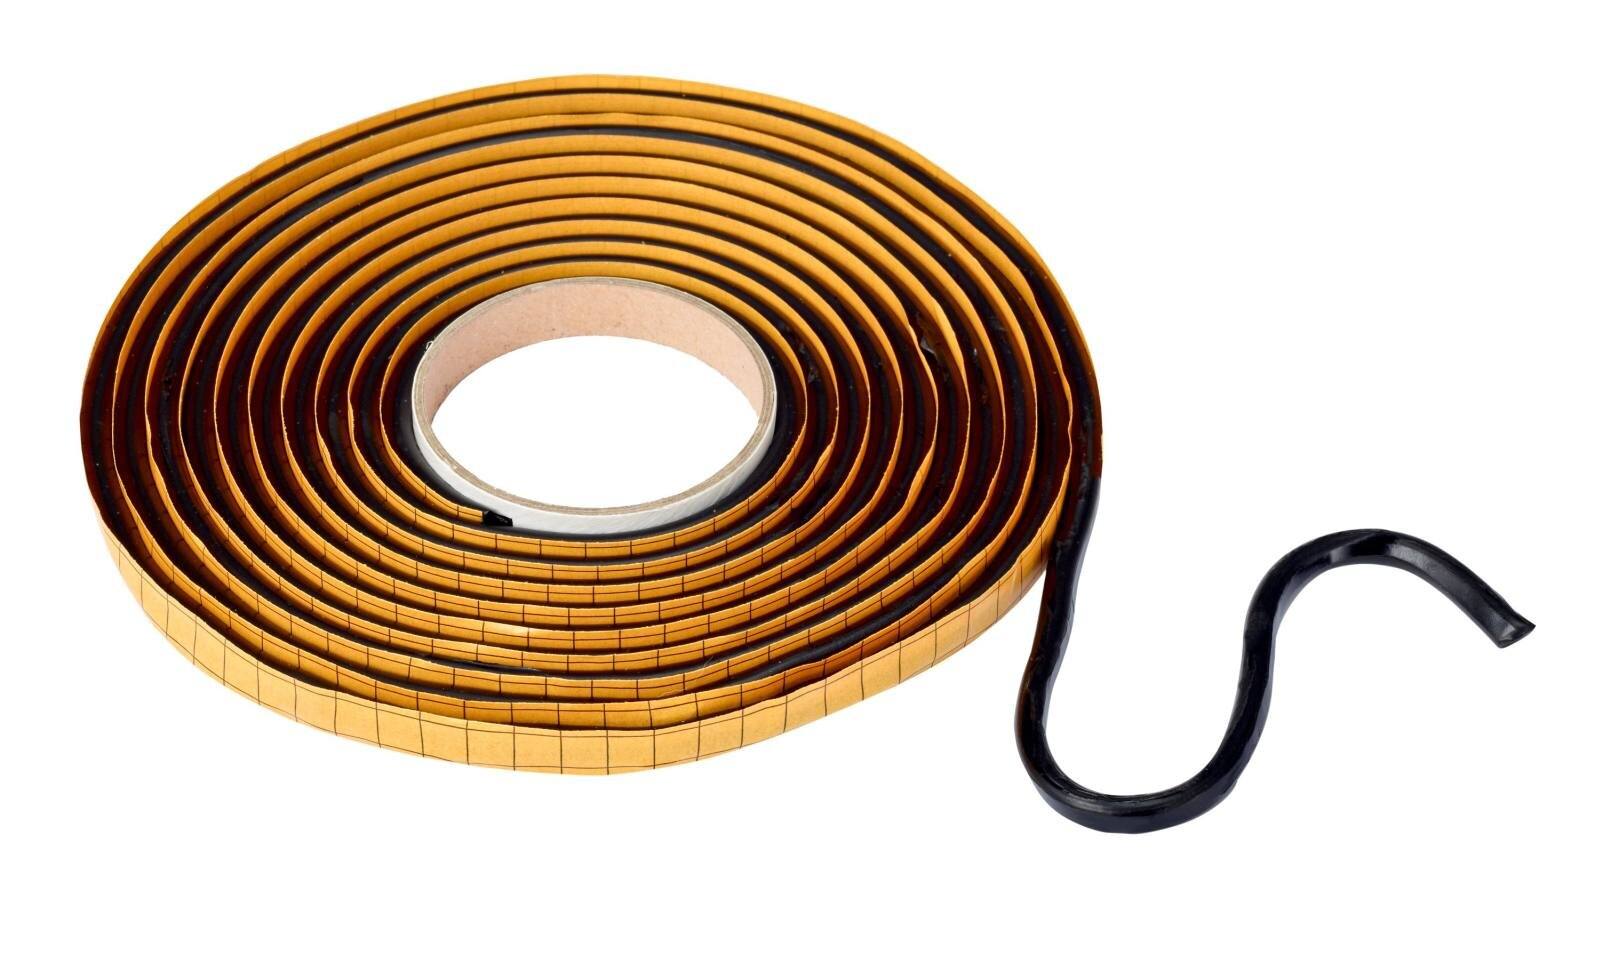 3M Scotch-Weld cordón redondo a base de caucho butílico 5313, negro, diámetro 8 mm x 6 m